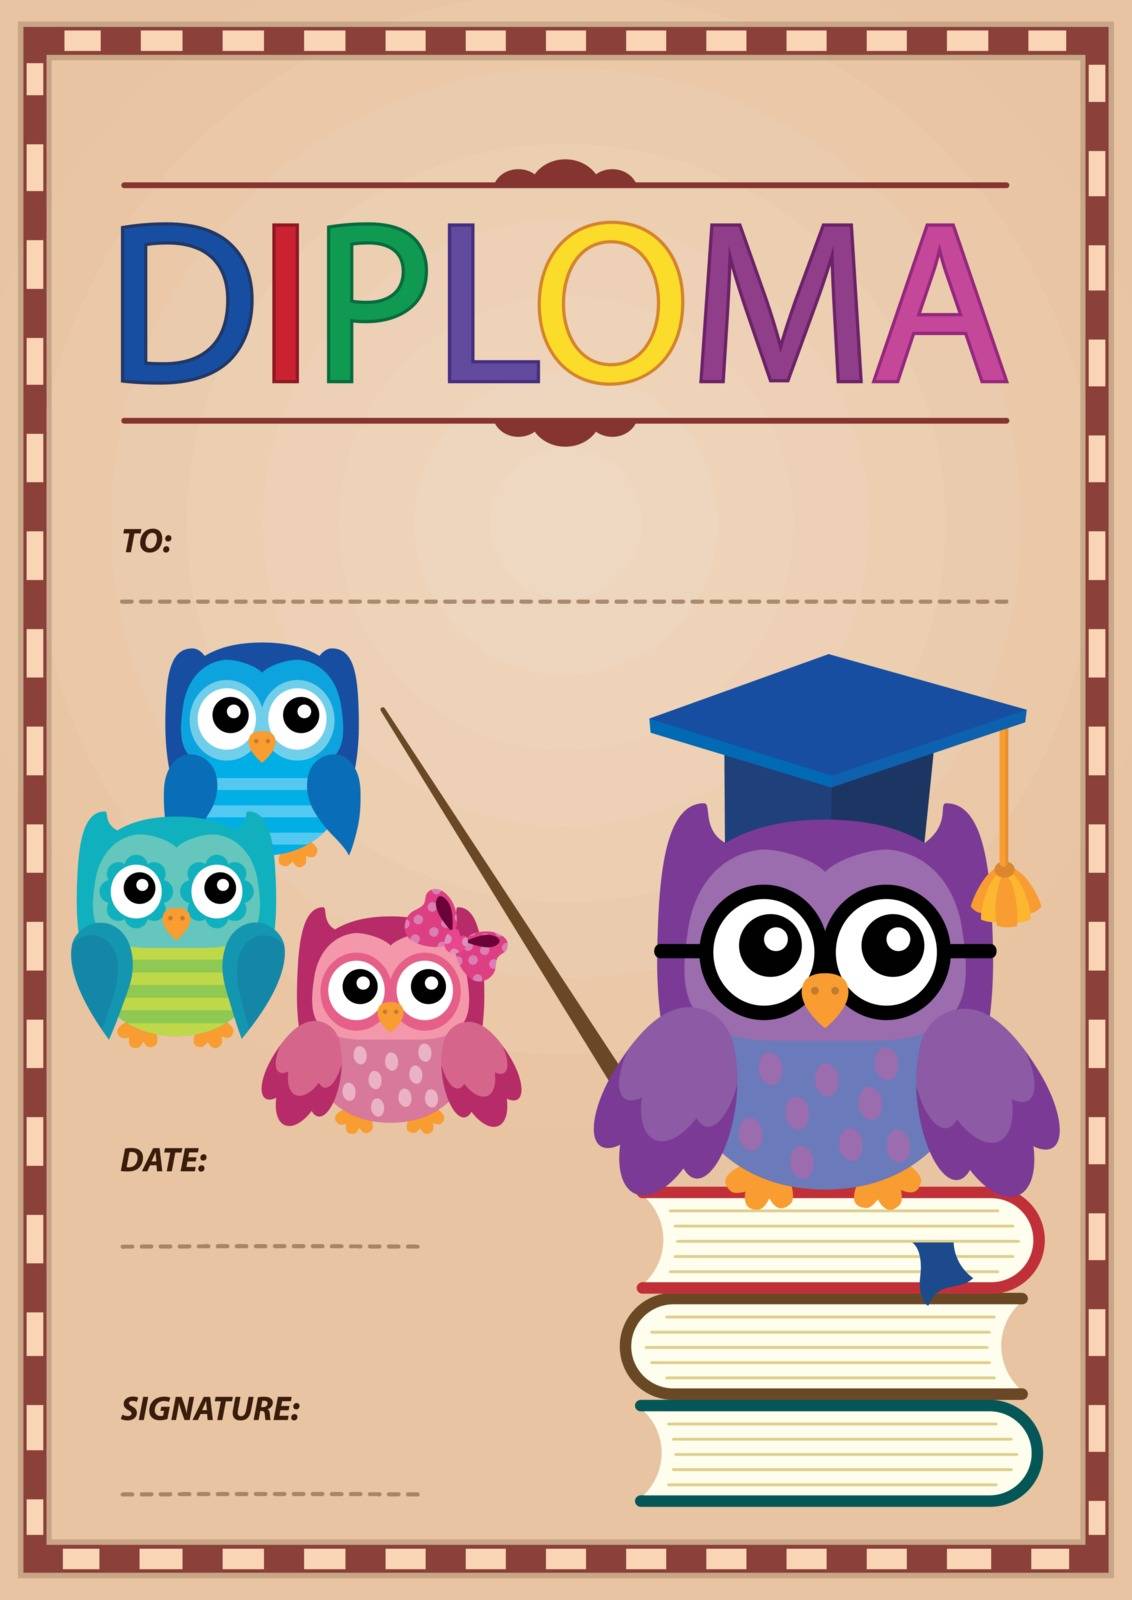 Diploma thematics image 4 - eps10 vector illustration.